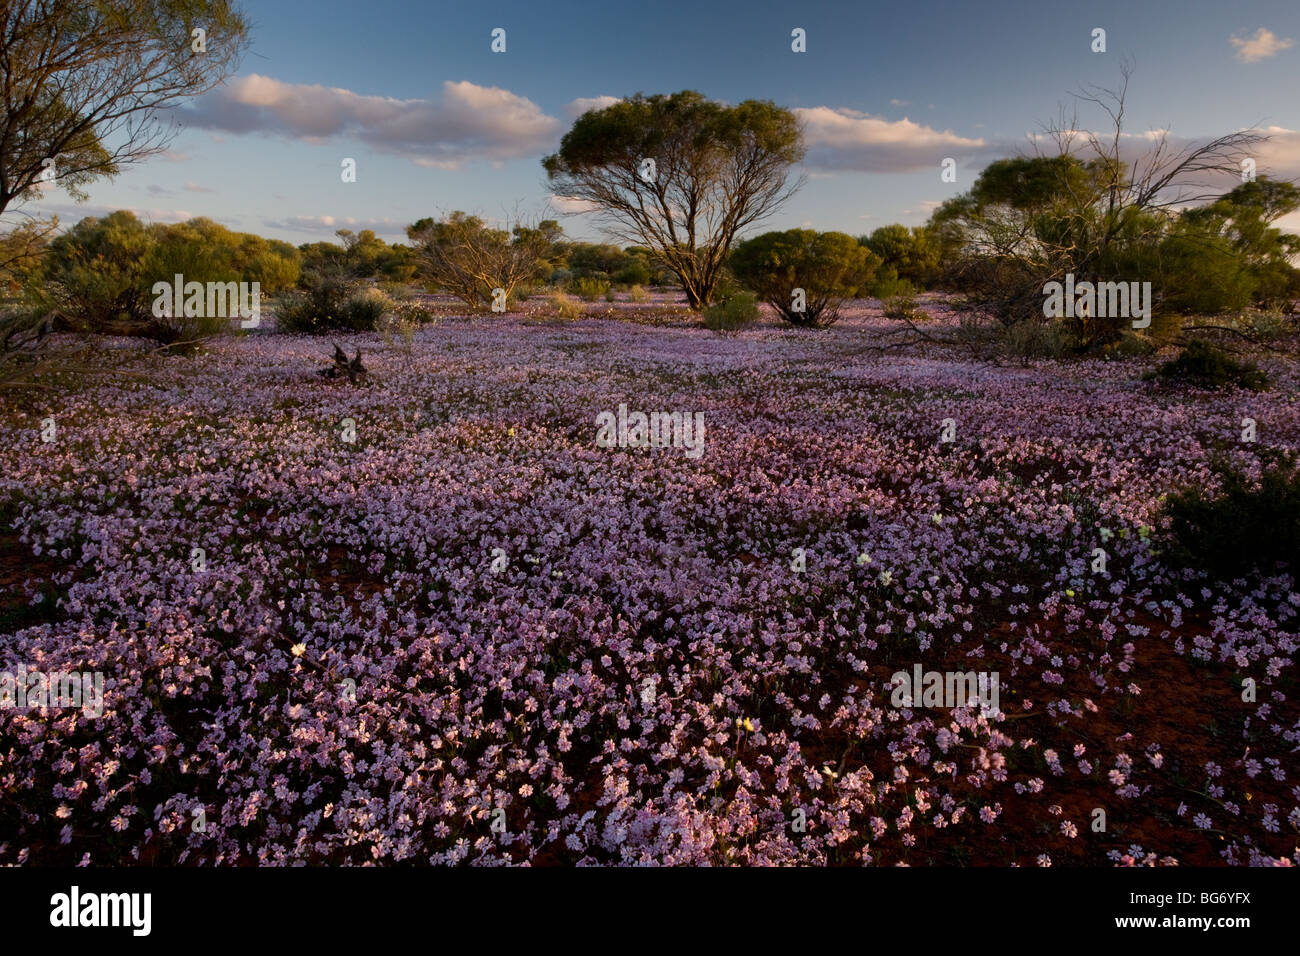 Masses of Pink Velleia, Velleia rosea, and other spring everlasting flowers in semi-desert scrub near Paynes Find, Australia Stock Photo